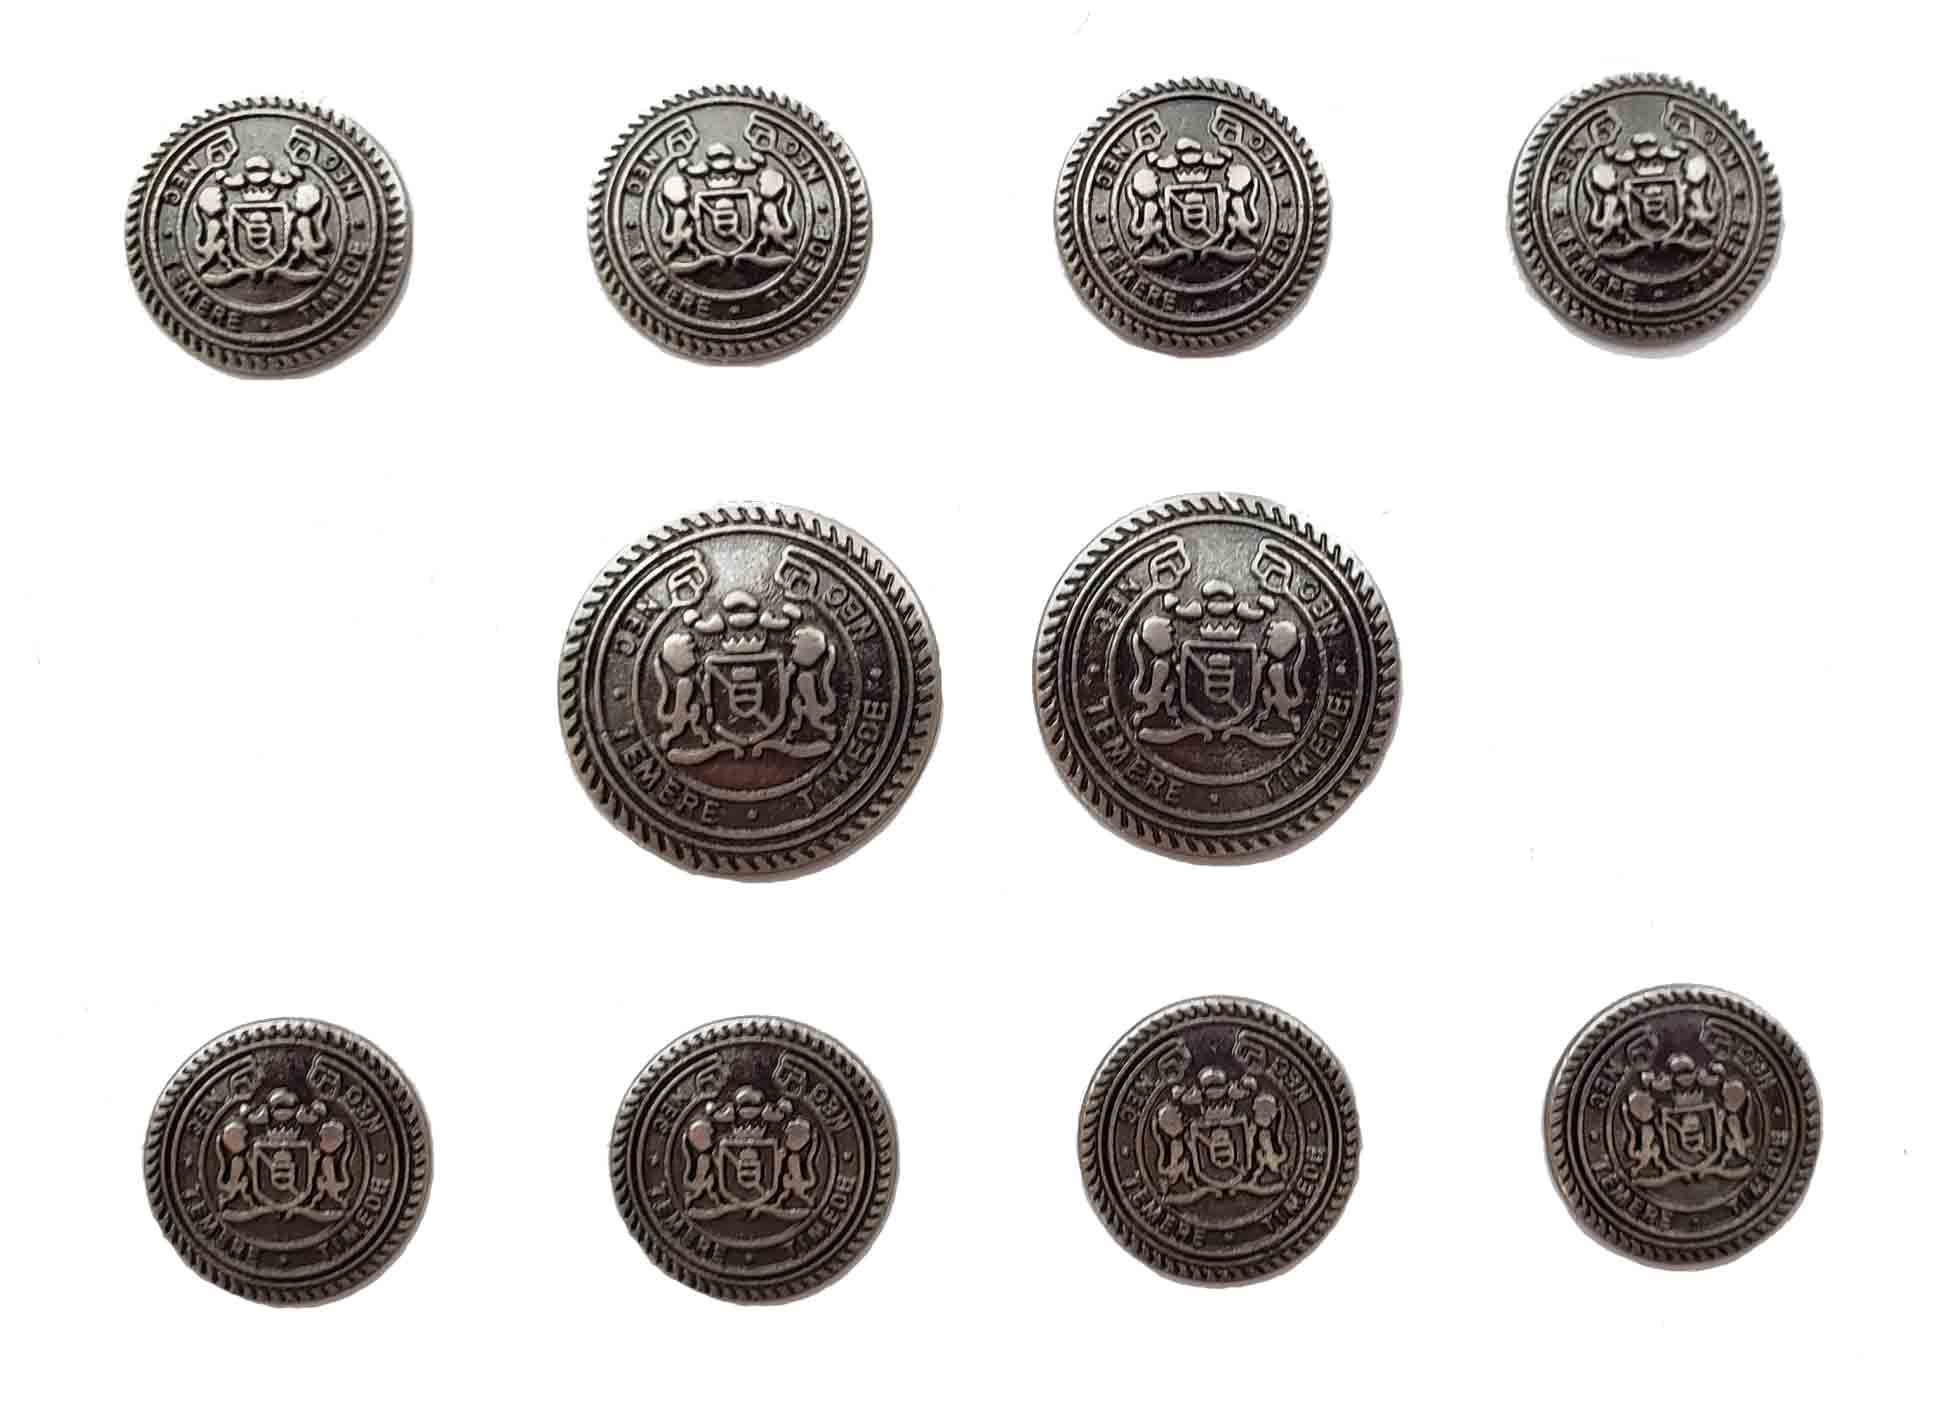 Vintage Jos A Bank Blazer Buttons Set Gray Silver Nec Temere Nec Timide Shank Metal Men's